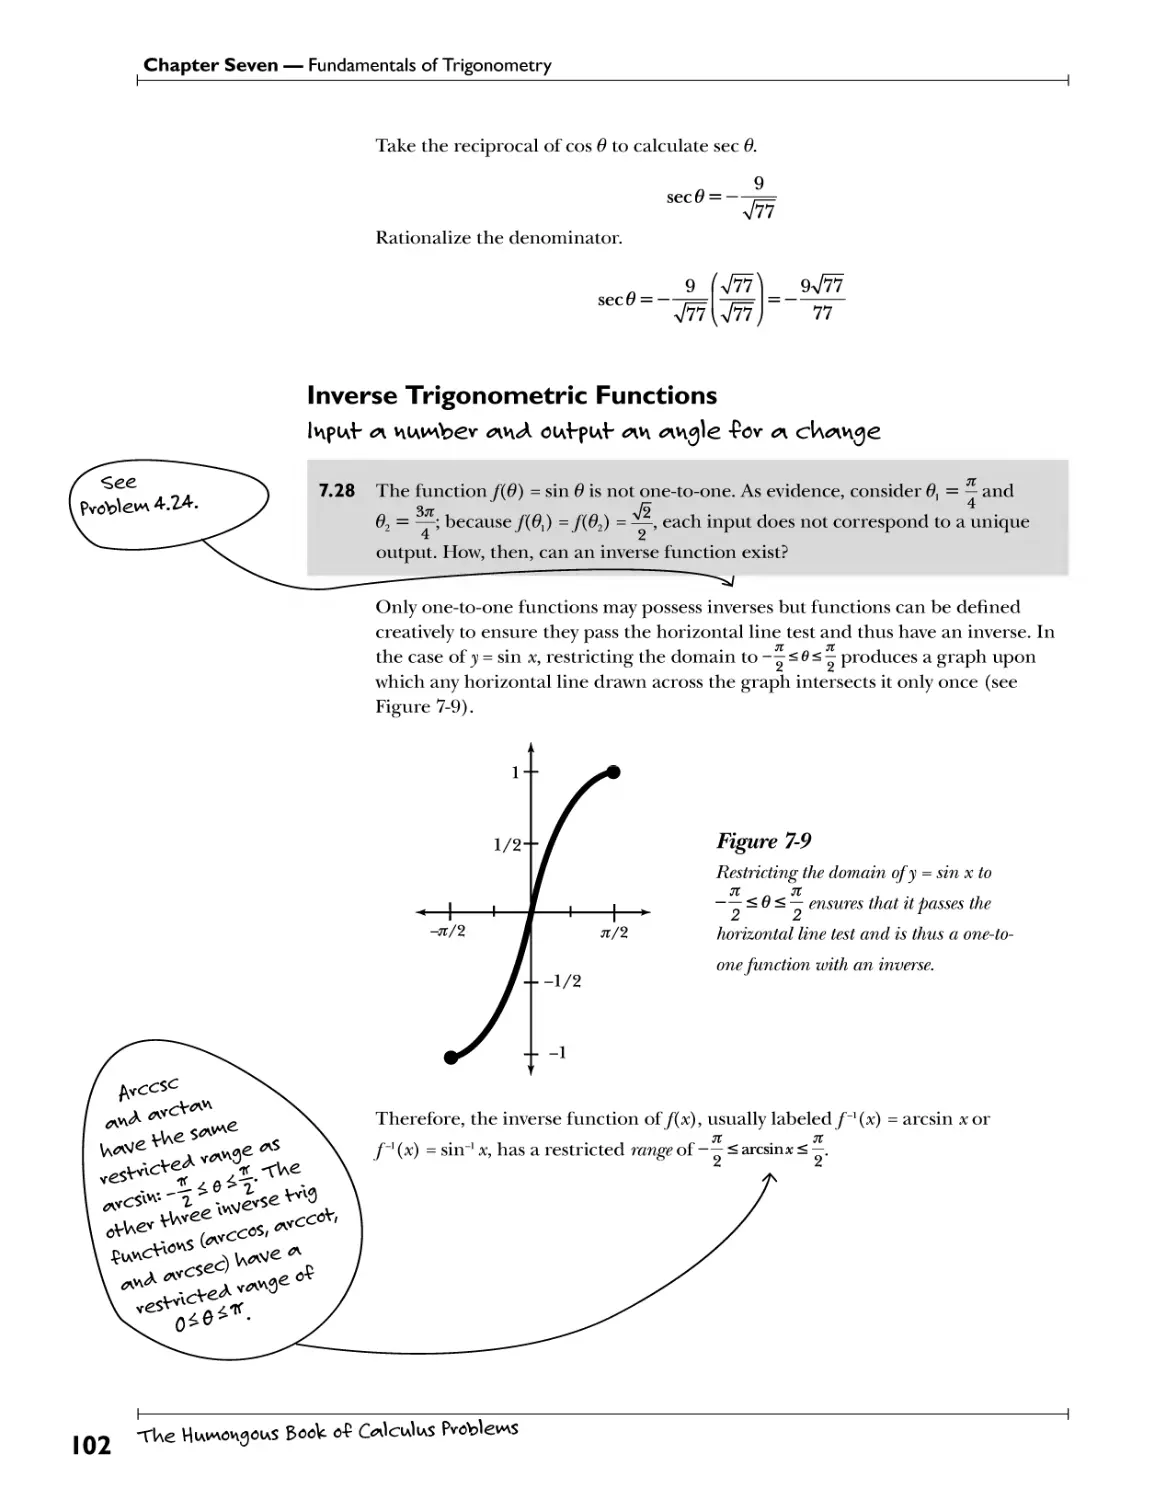 Inverse Trigonometric Functions 102